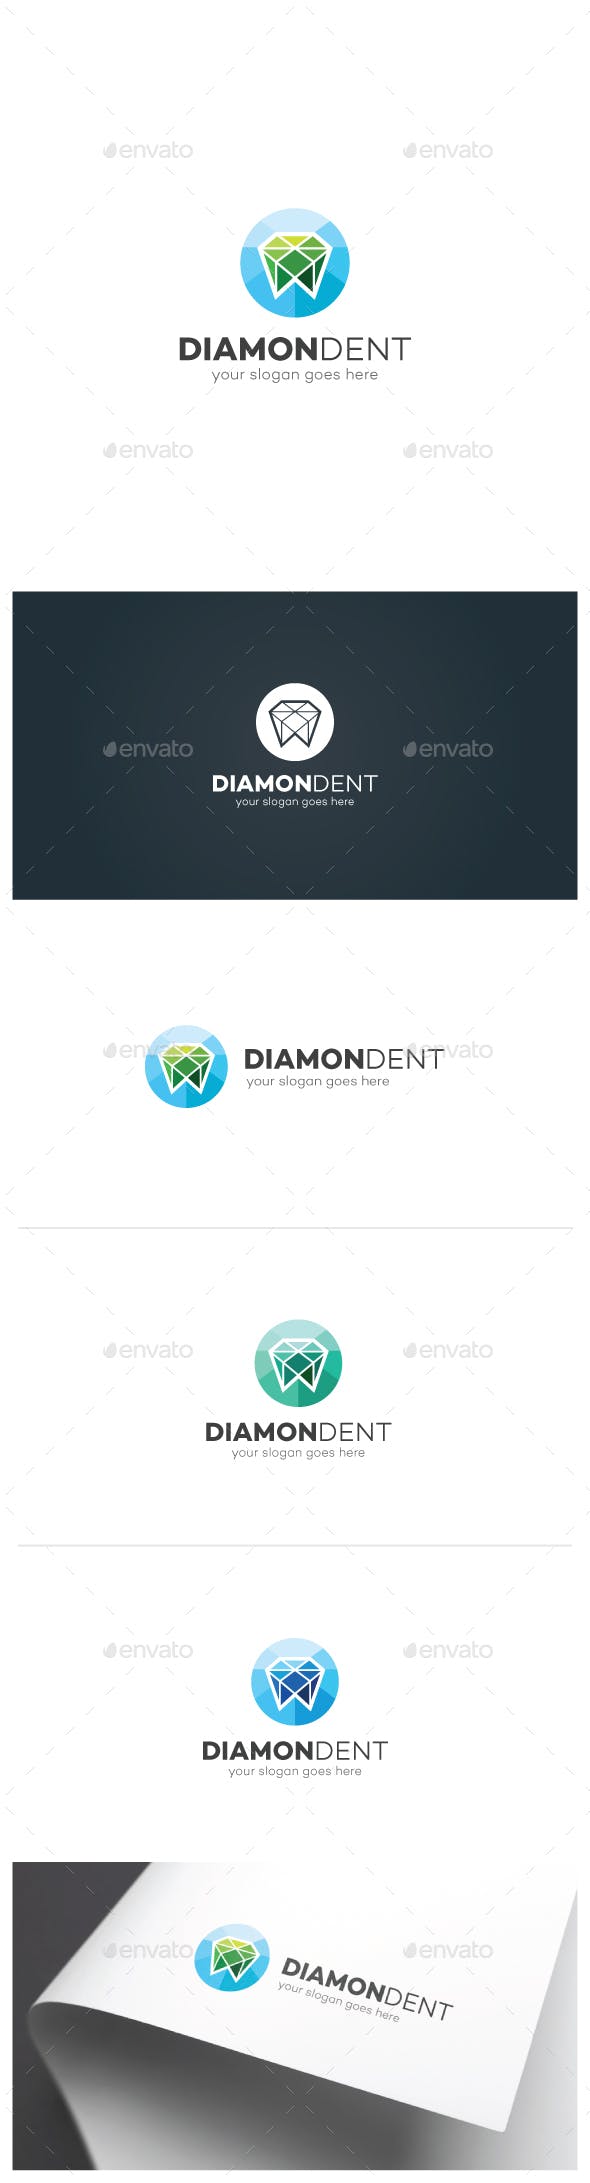 Diamond Tooth Logo - Diamond Tooth Logo by Denzla | GraphicRiver